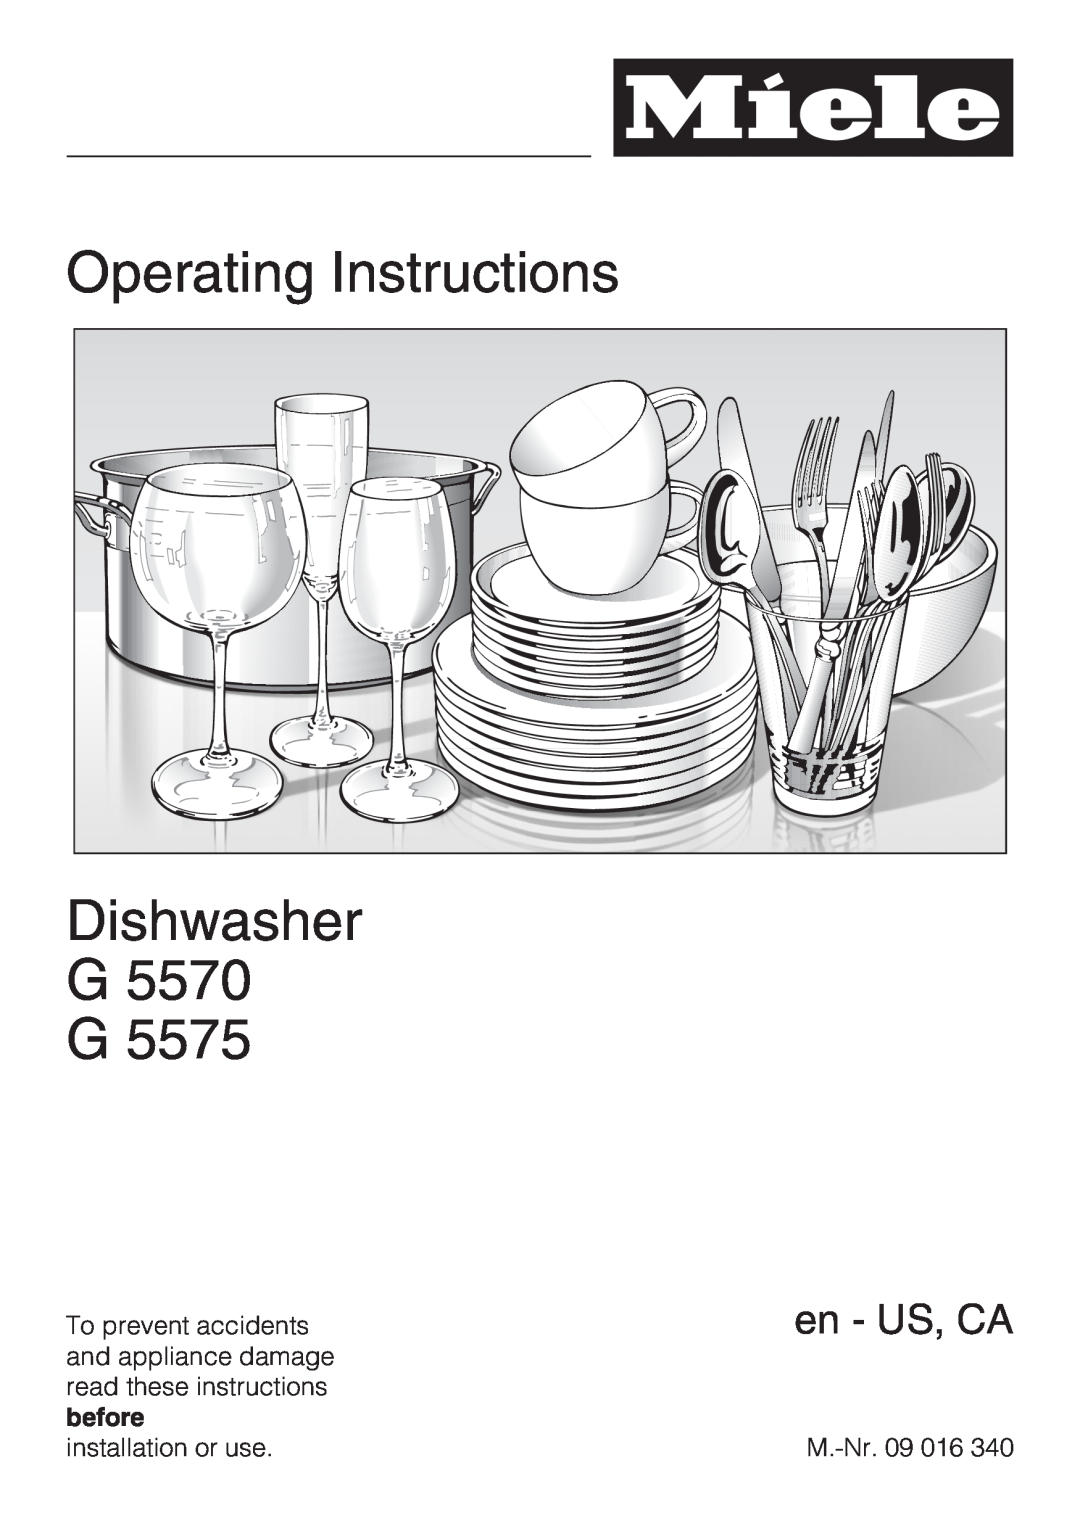 Miele G 5575, G 5570 operating instructions Operating Instructions Dishwasher G5570 G, en - US, CA 